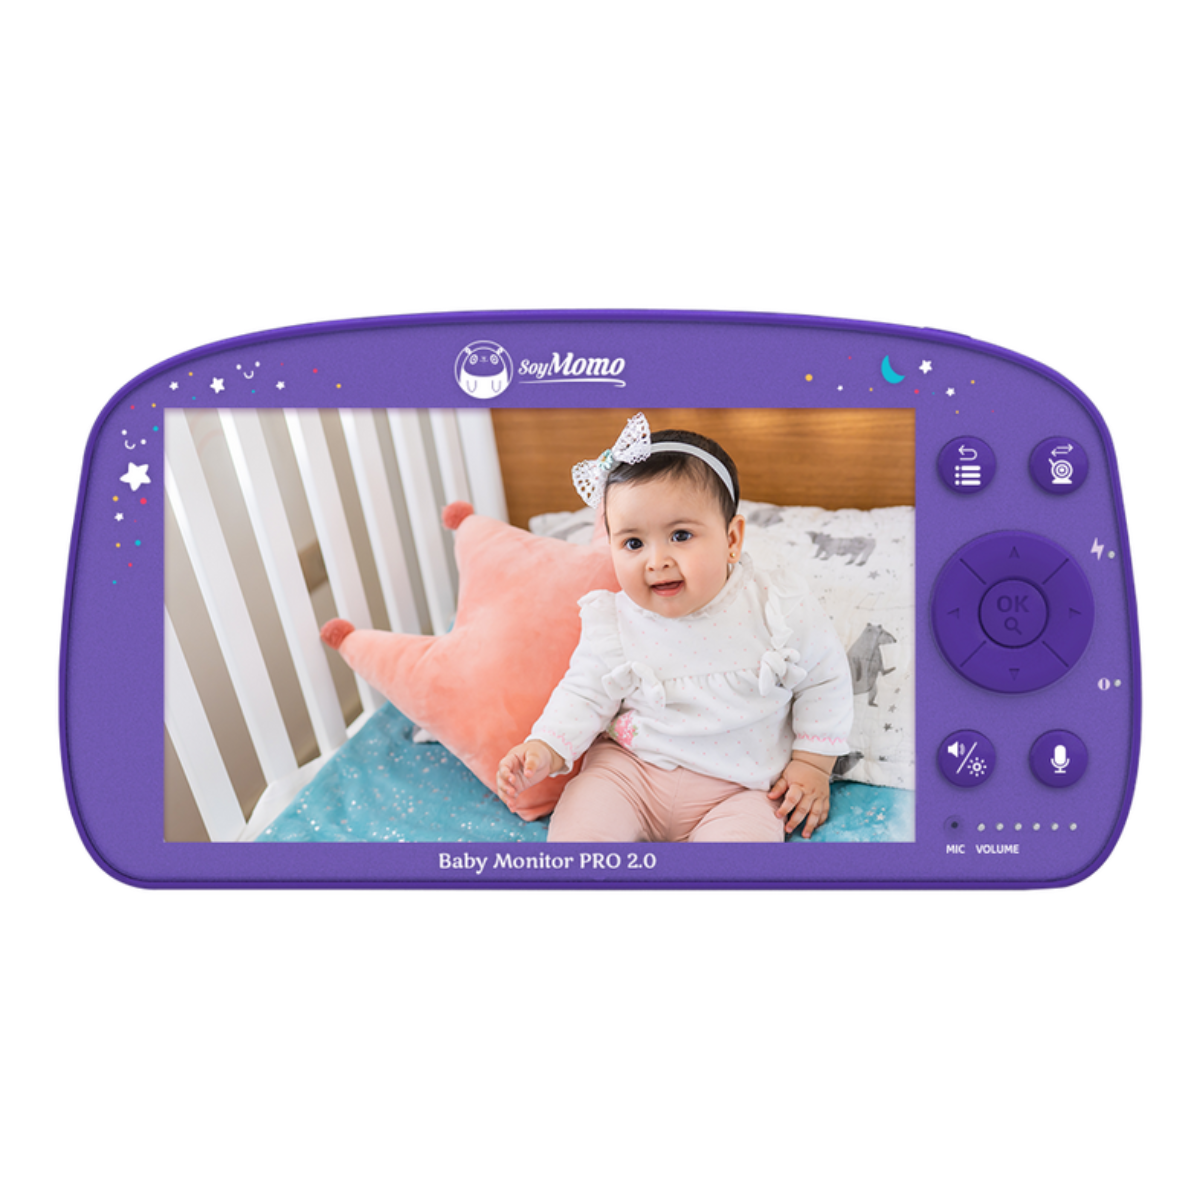 Pro Babyphone Baby Monitor SOYMOMO 2.0